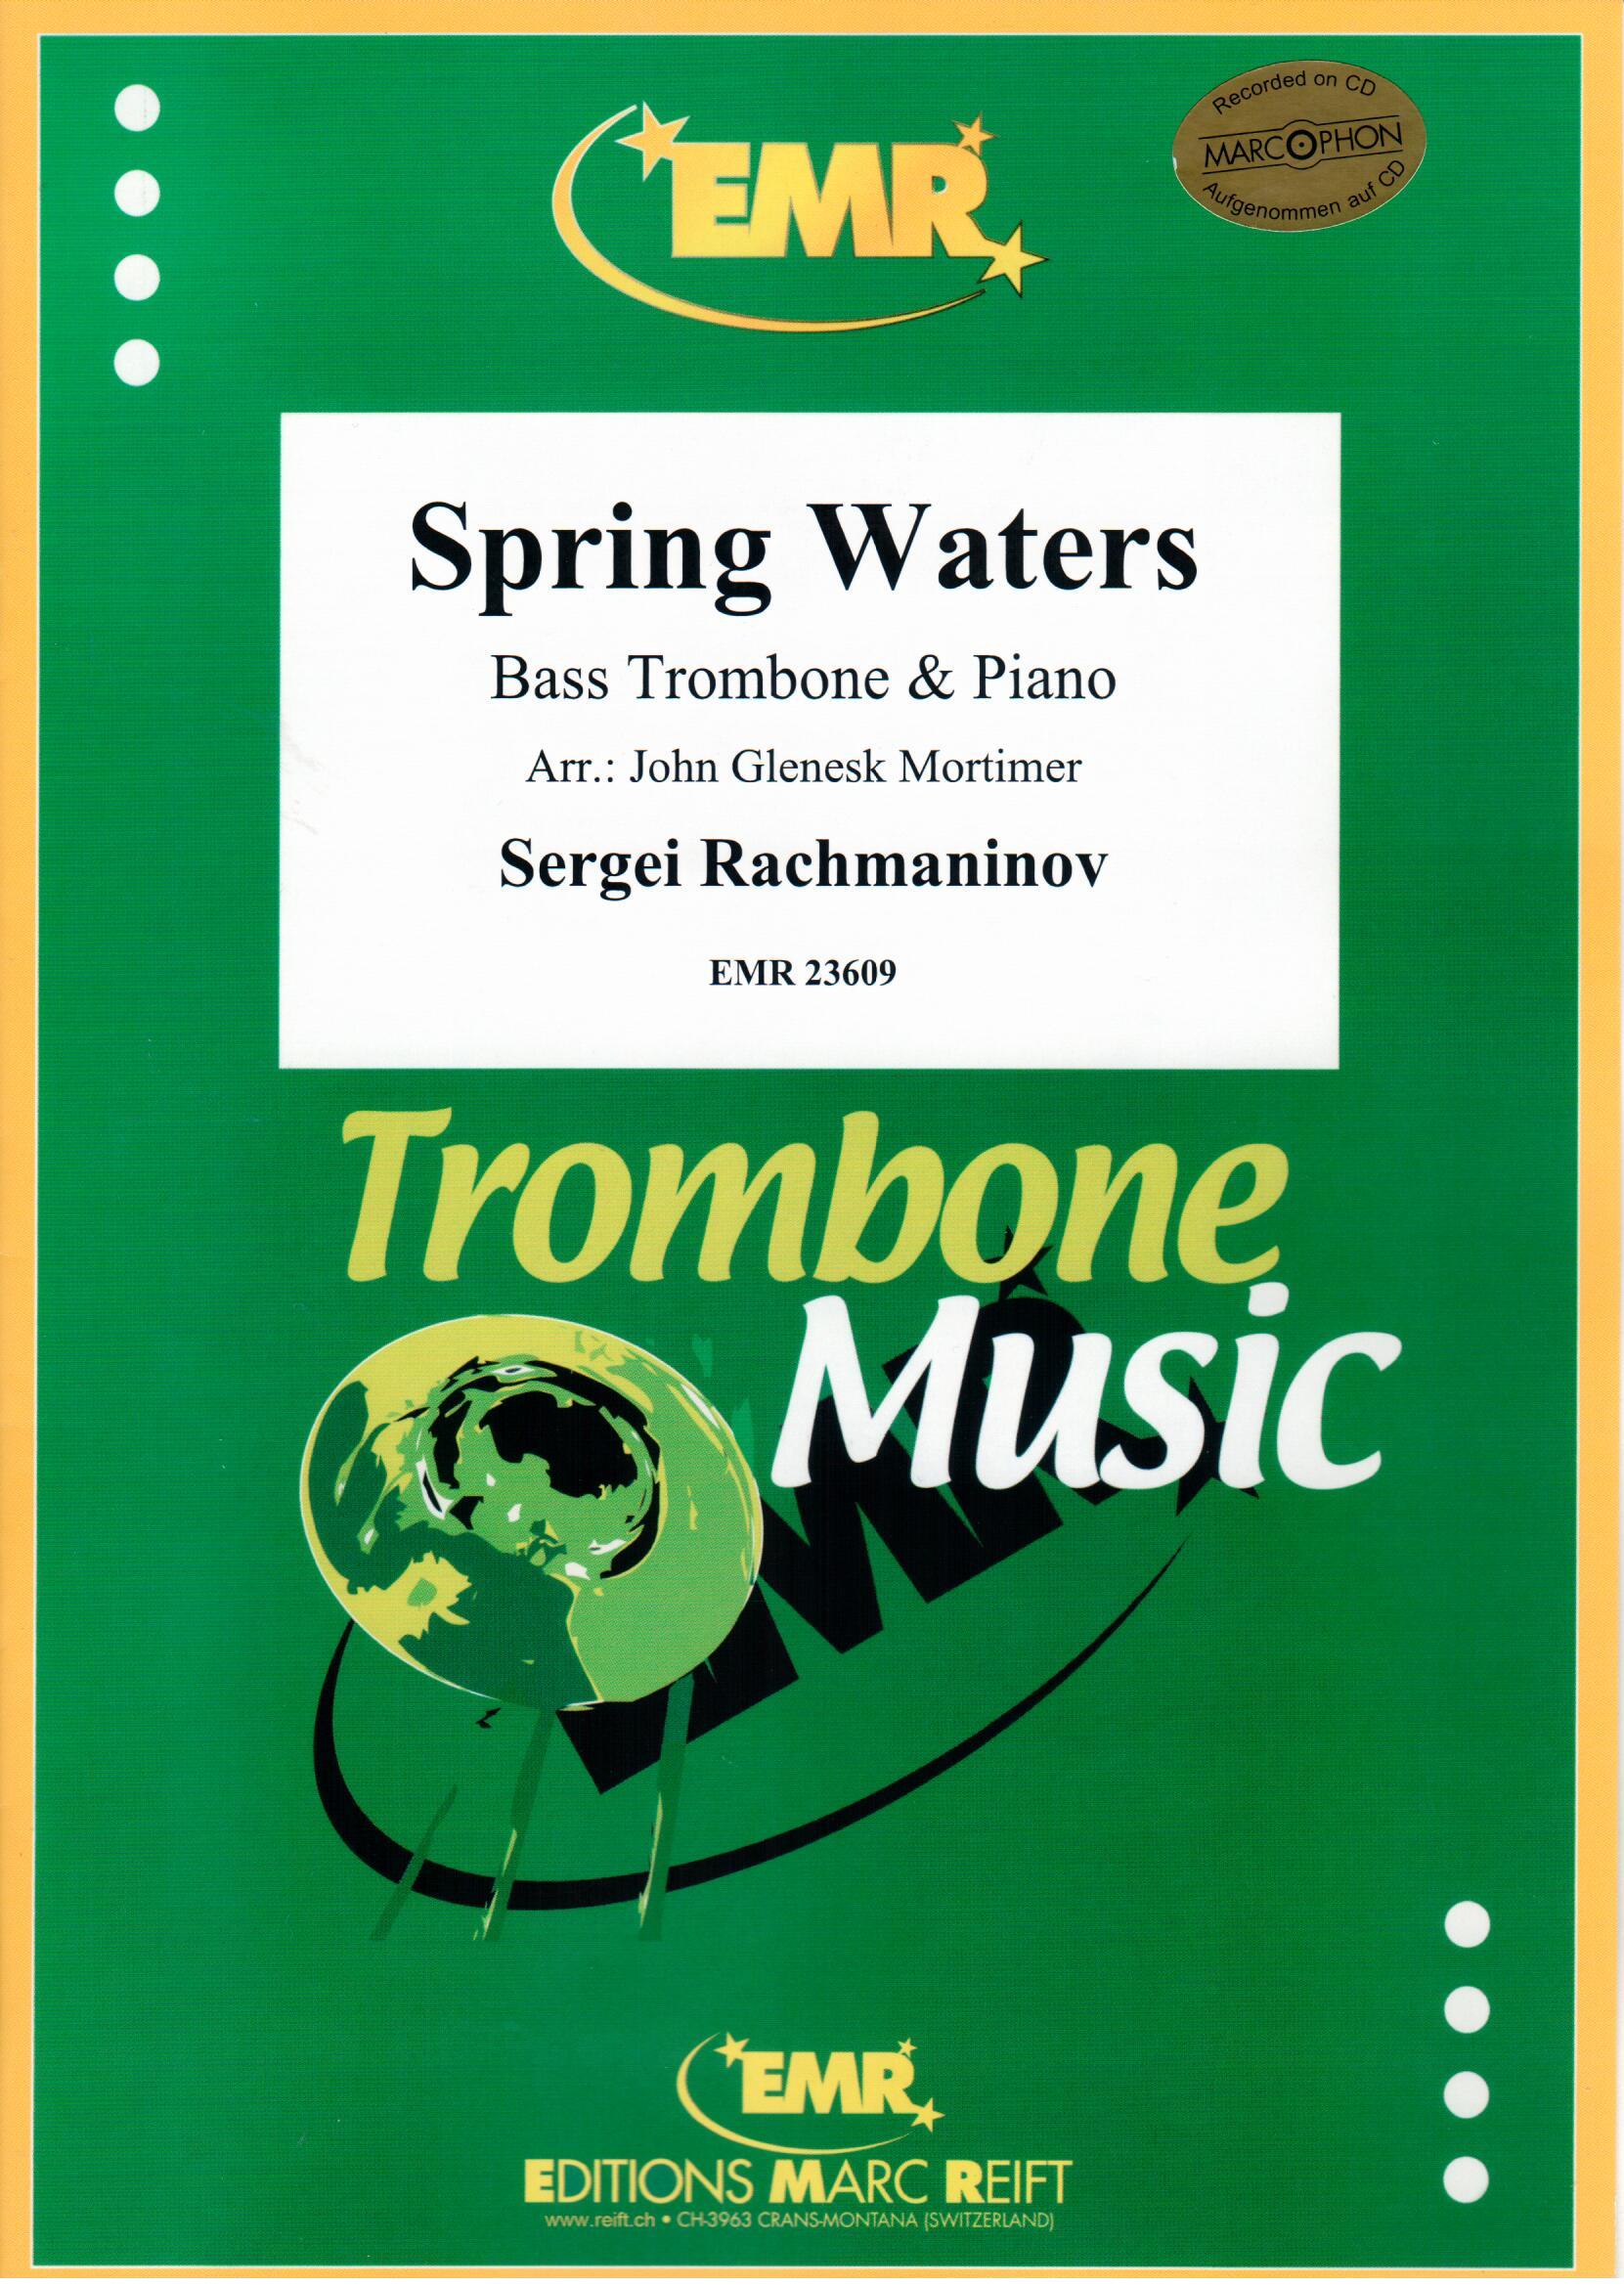 SPRING WATERS, EMR Bass Trombone